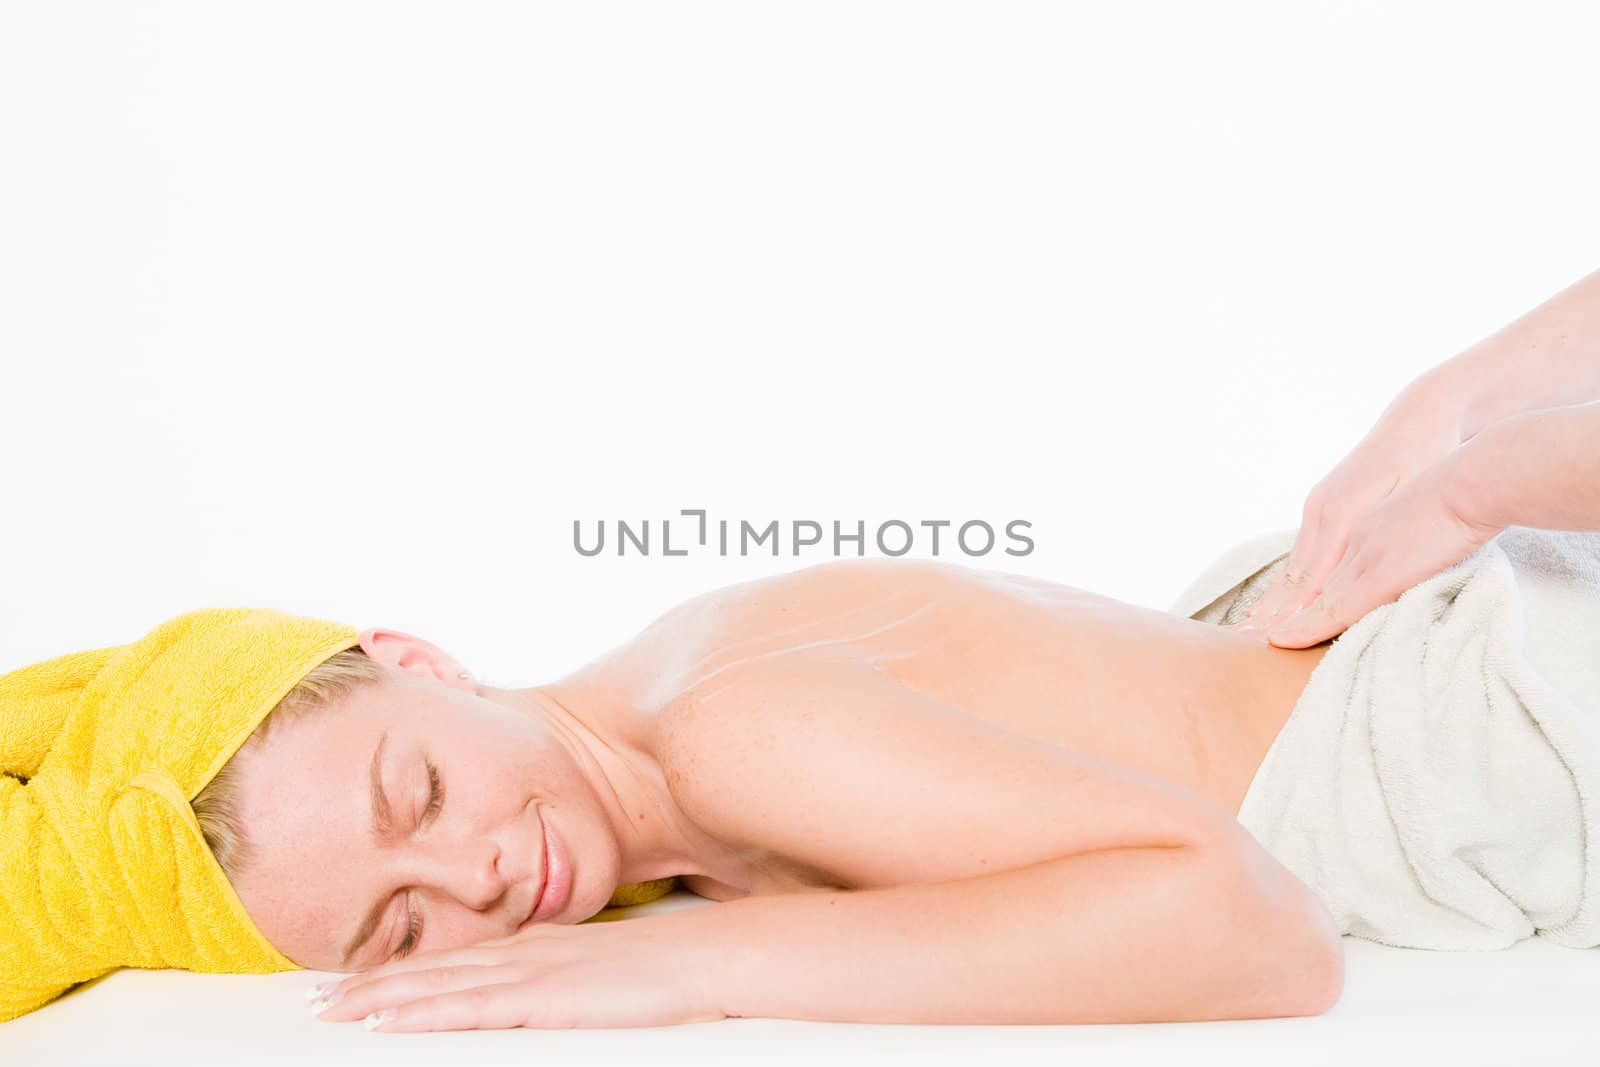 Studio portrait of a spa girl getting a back rub